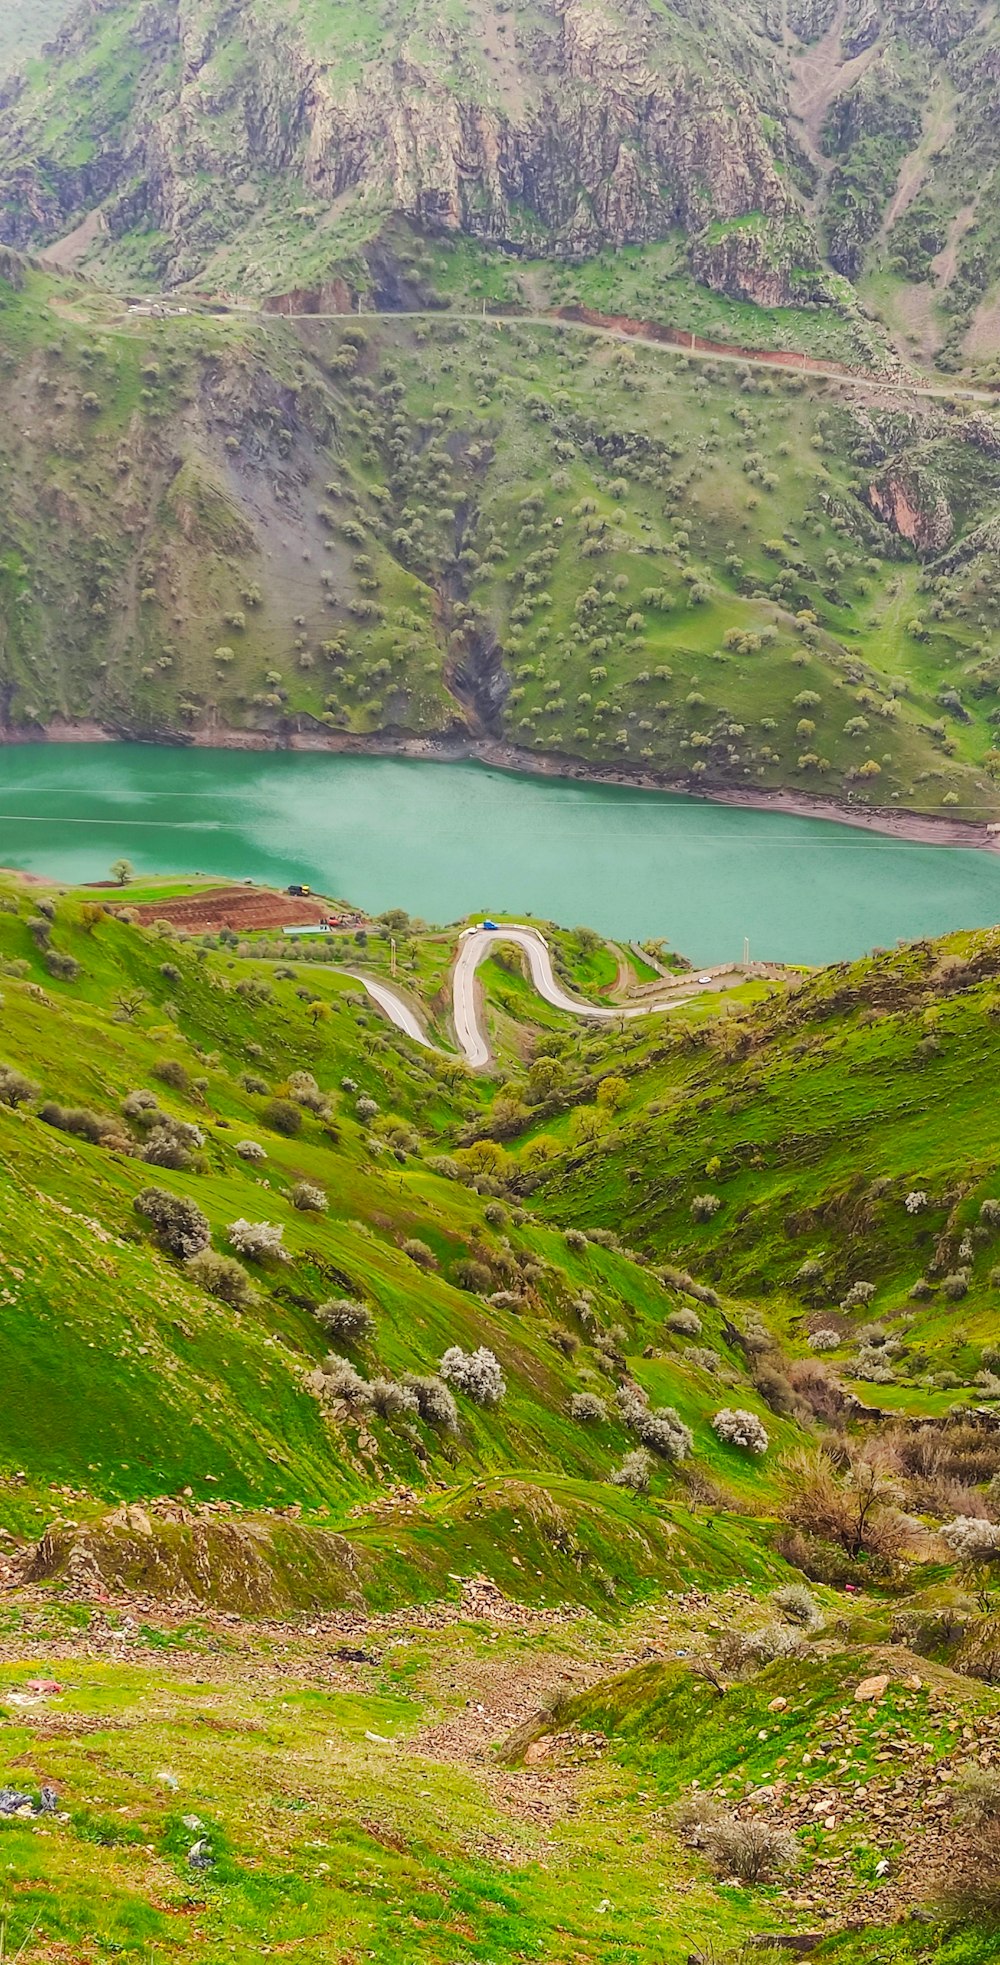 a lake in a mountainous region